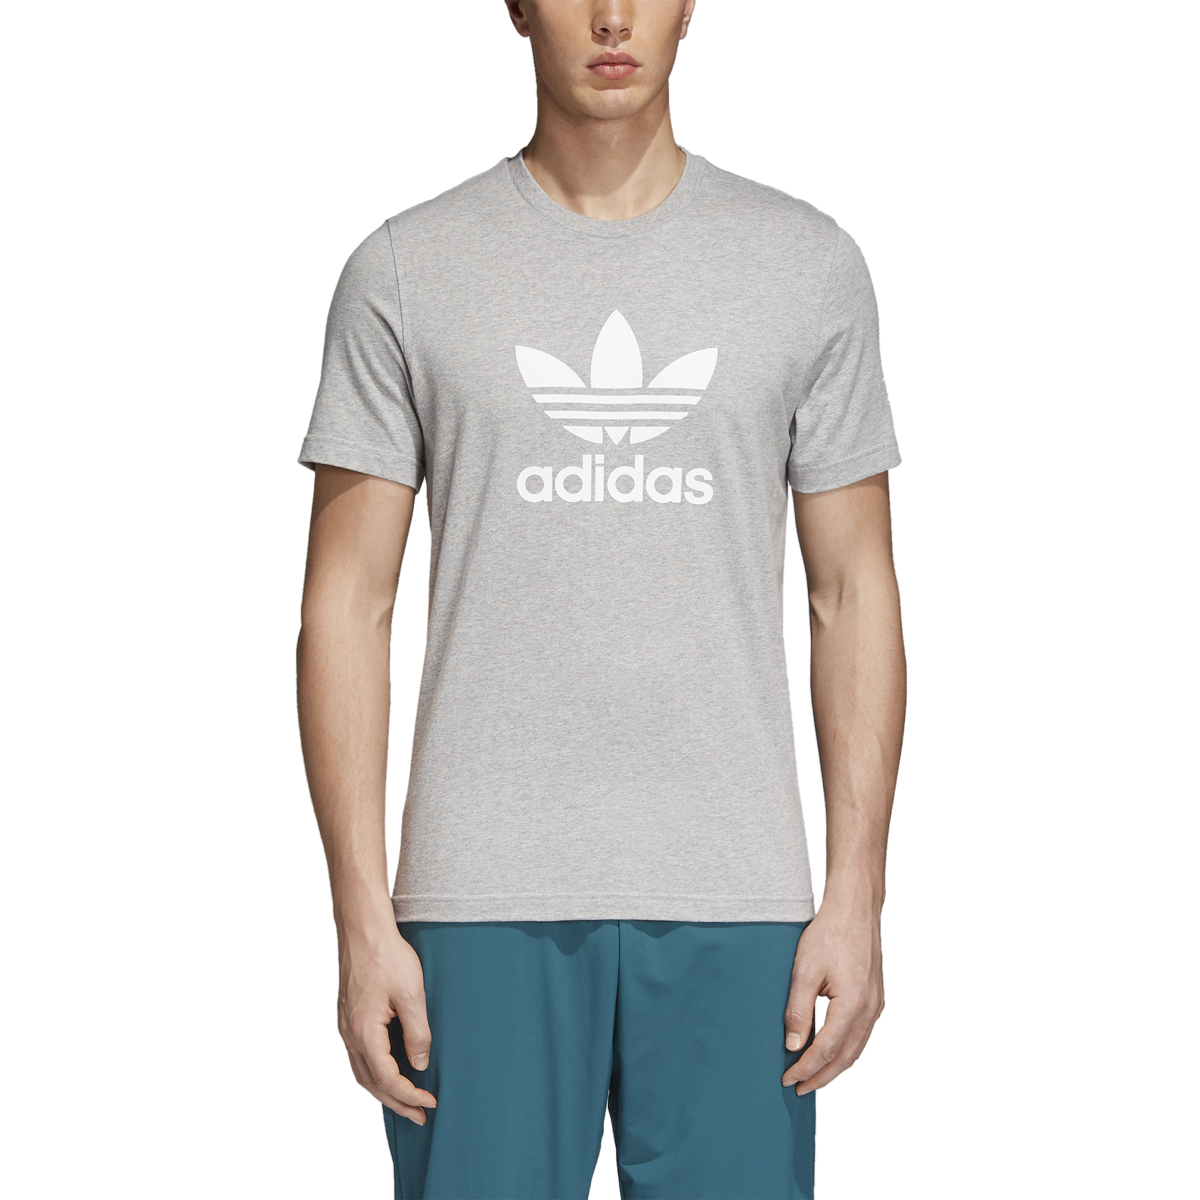 Adidas Originals Men's Trefoil Tee Grey Heather-White cy4574 | eBay